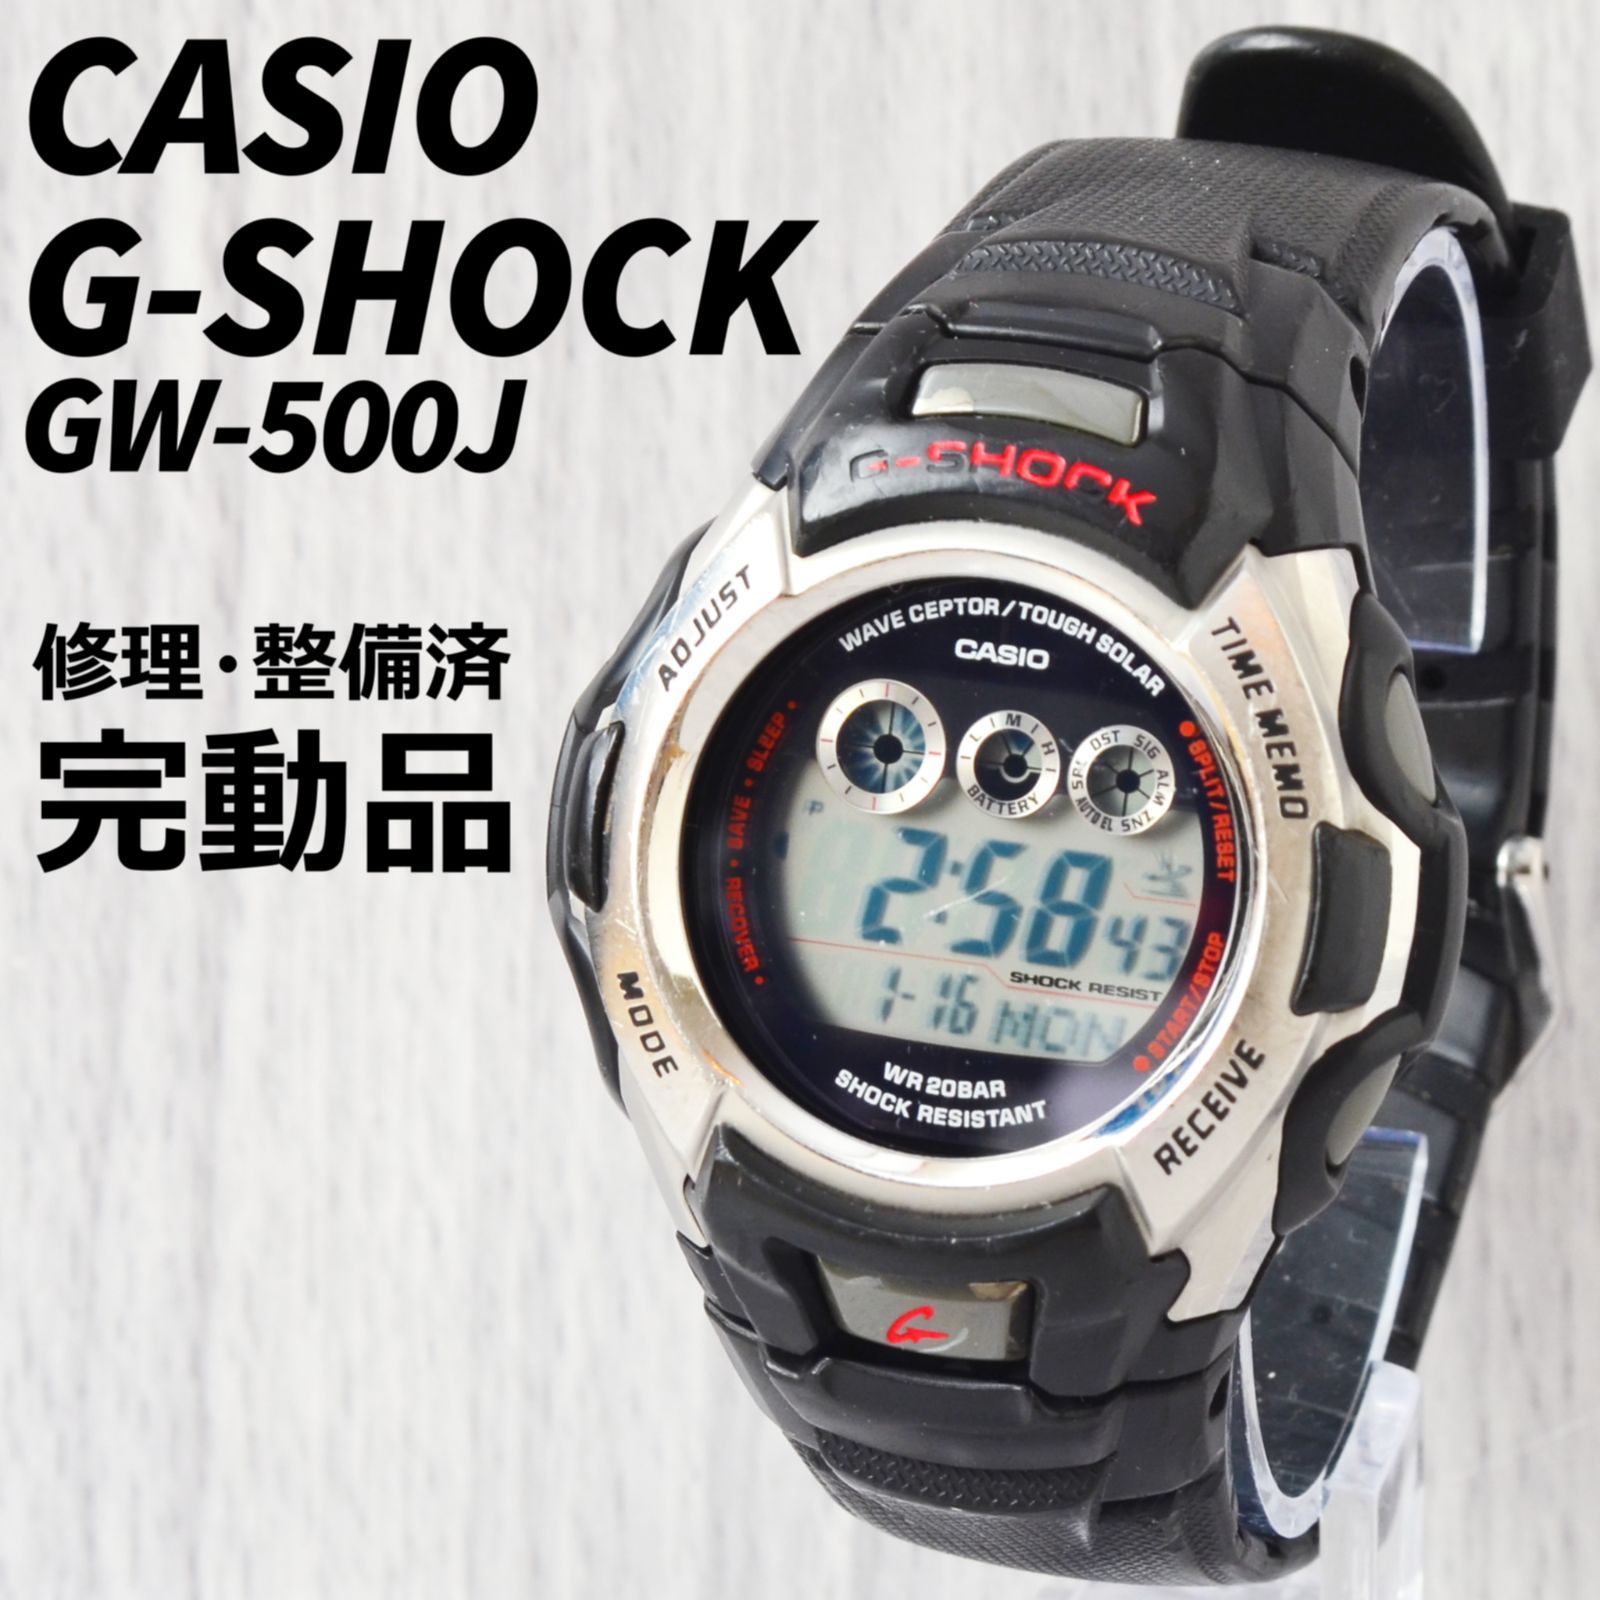 CASIO G-SHOCK GW-500J 電波ソーラー ジーショック 整備済 - スタジオ